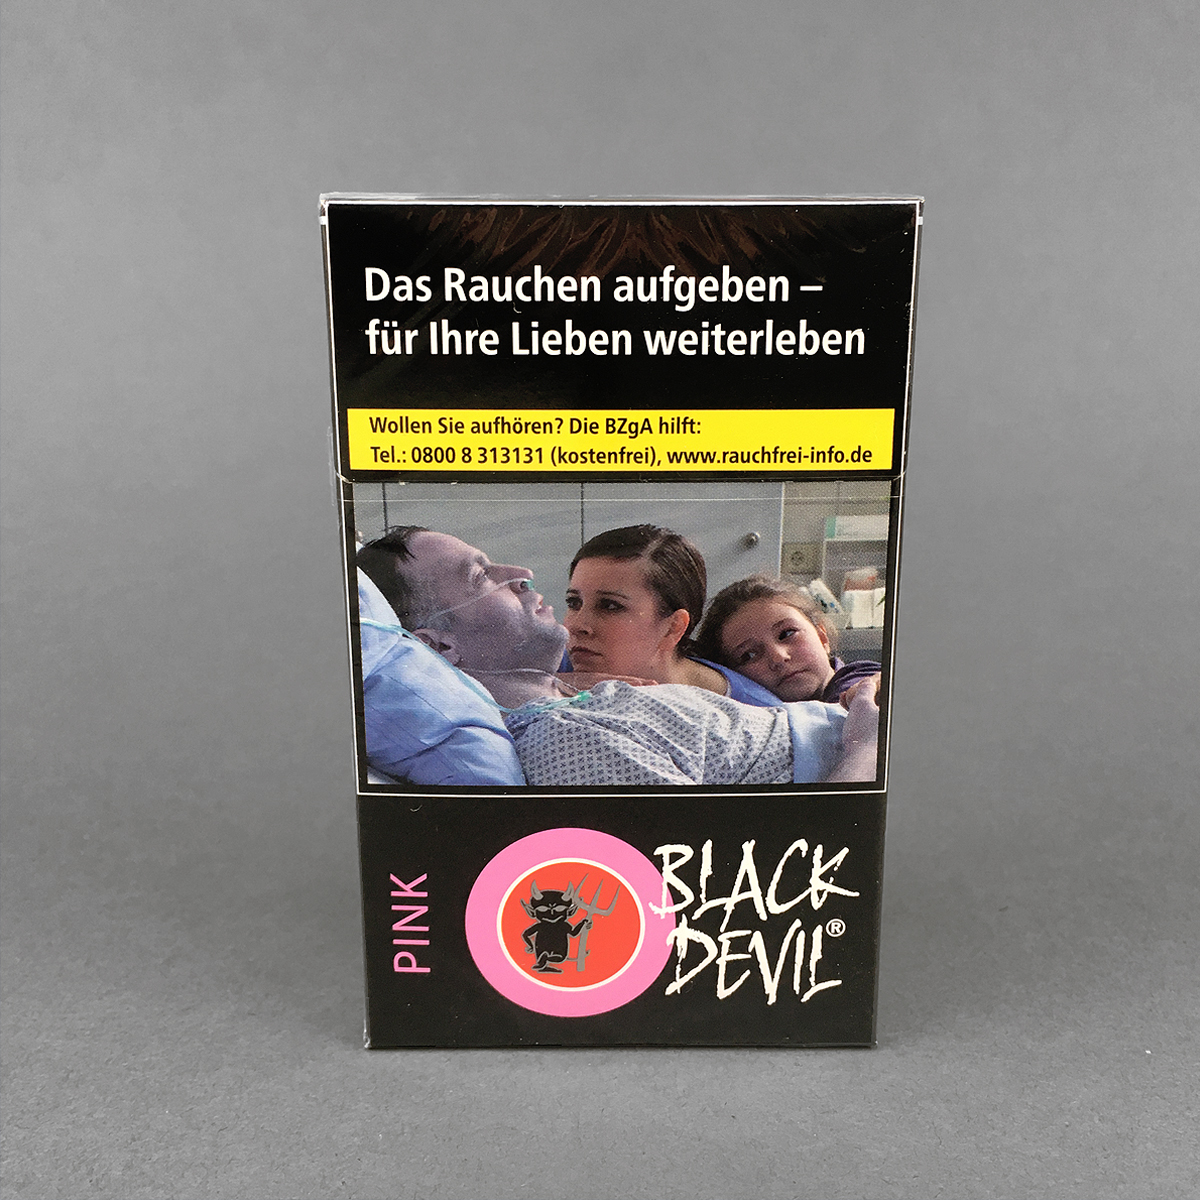 Devil zigaretten deutschland black Black Devil